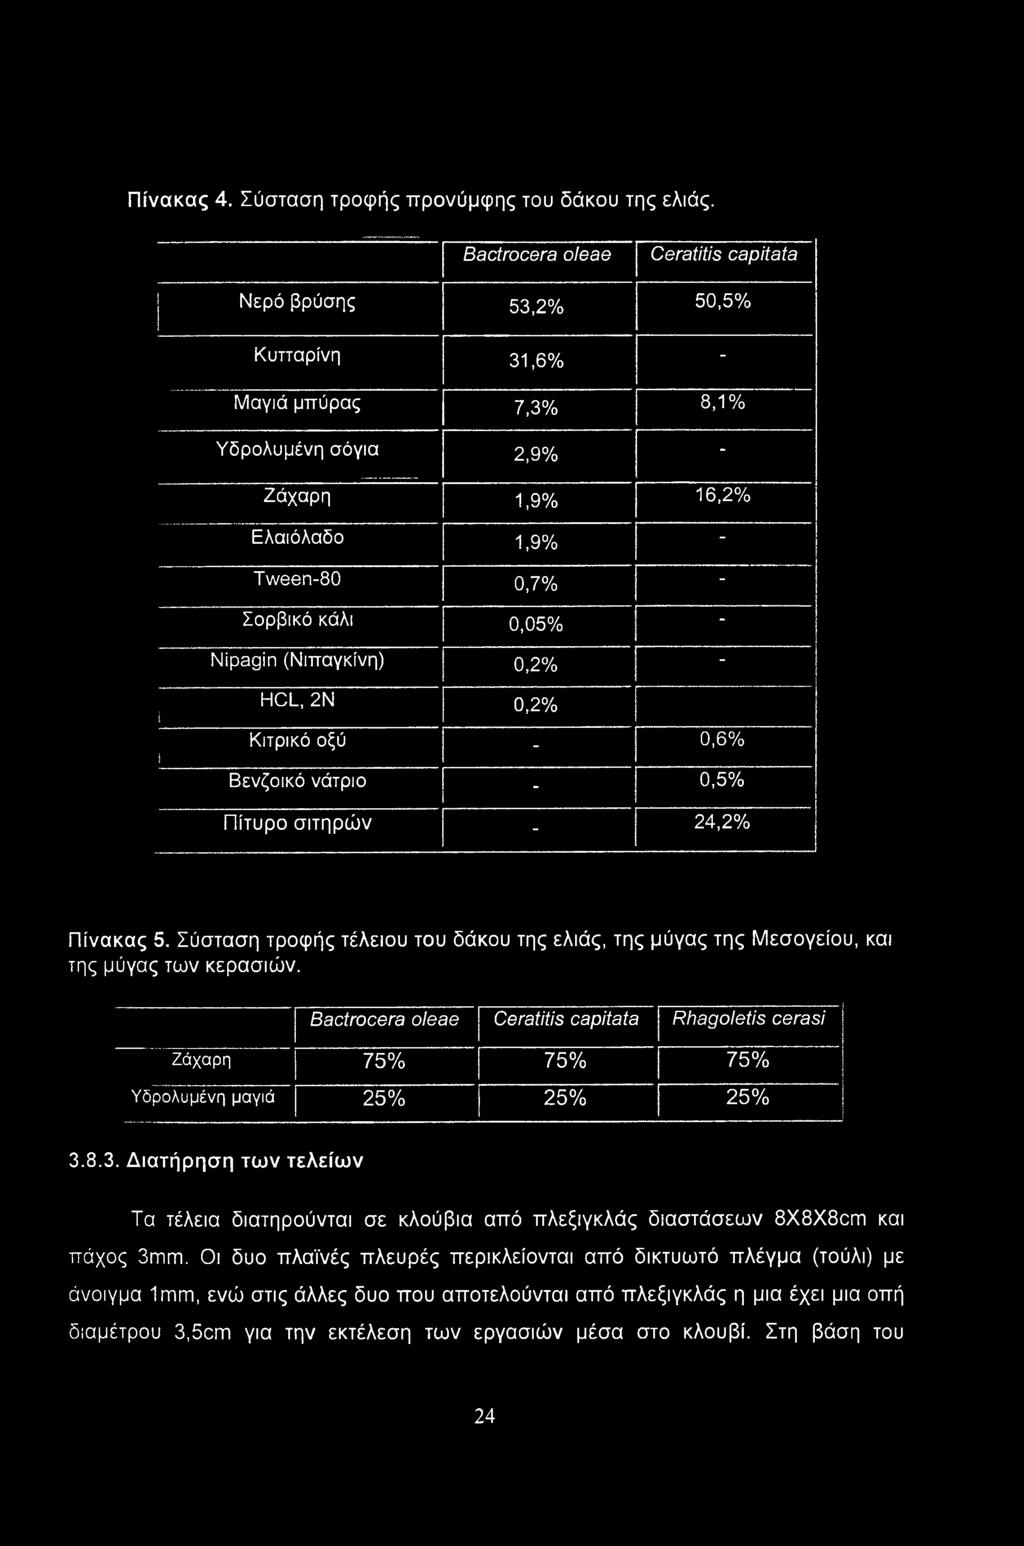 Nipagin (Νιπαγκίνη) 0,2% - 1 ί HCL, 2Ν 0,2% Κιτρικό οξύ - 0,6% Βενζοικό νάτριο - 0,5% Πίτυρο σιτηρών - 24,2% Πίνακας 5.